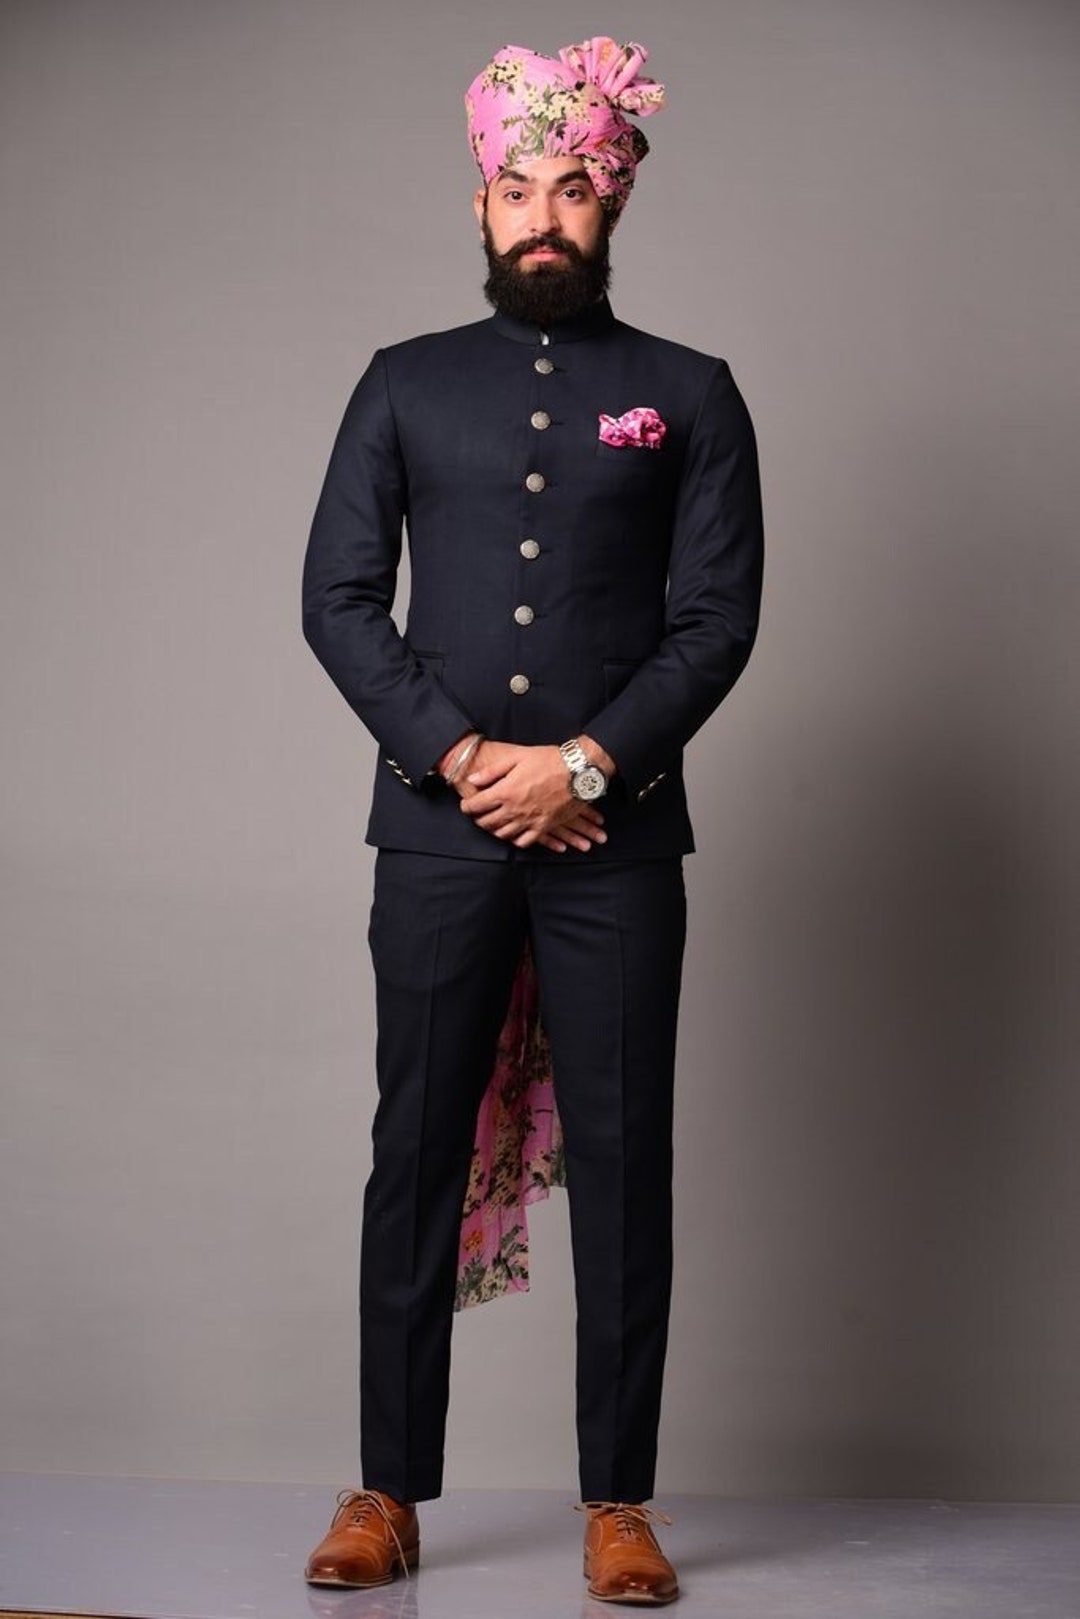 Top more than 223 formal bandhgala suits